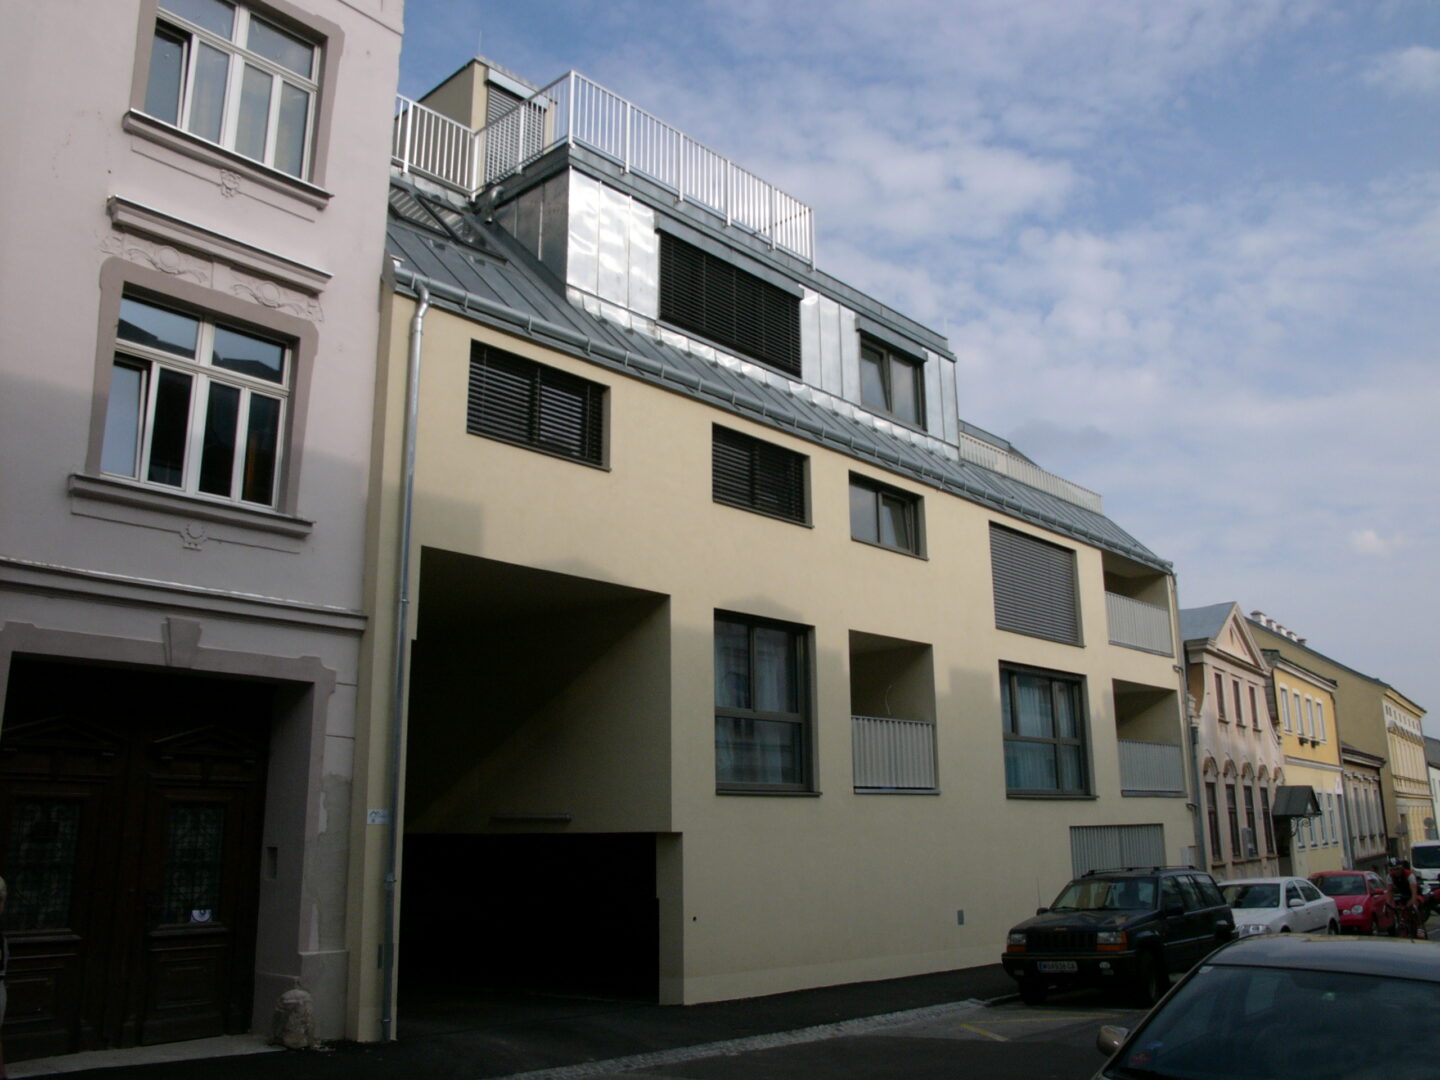 Referenzprojekt Klosterneuburg Albrechtstrasse 60